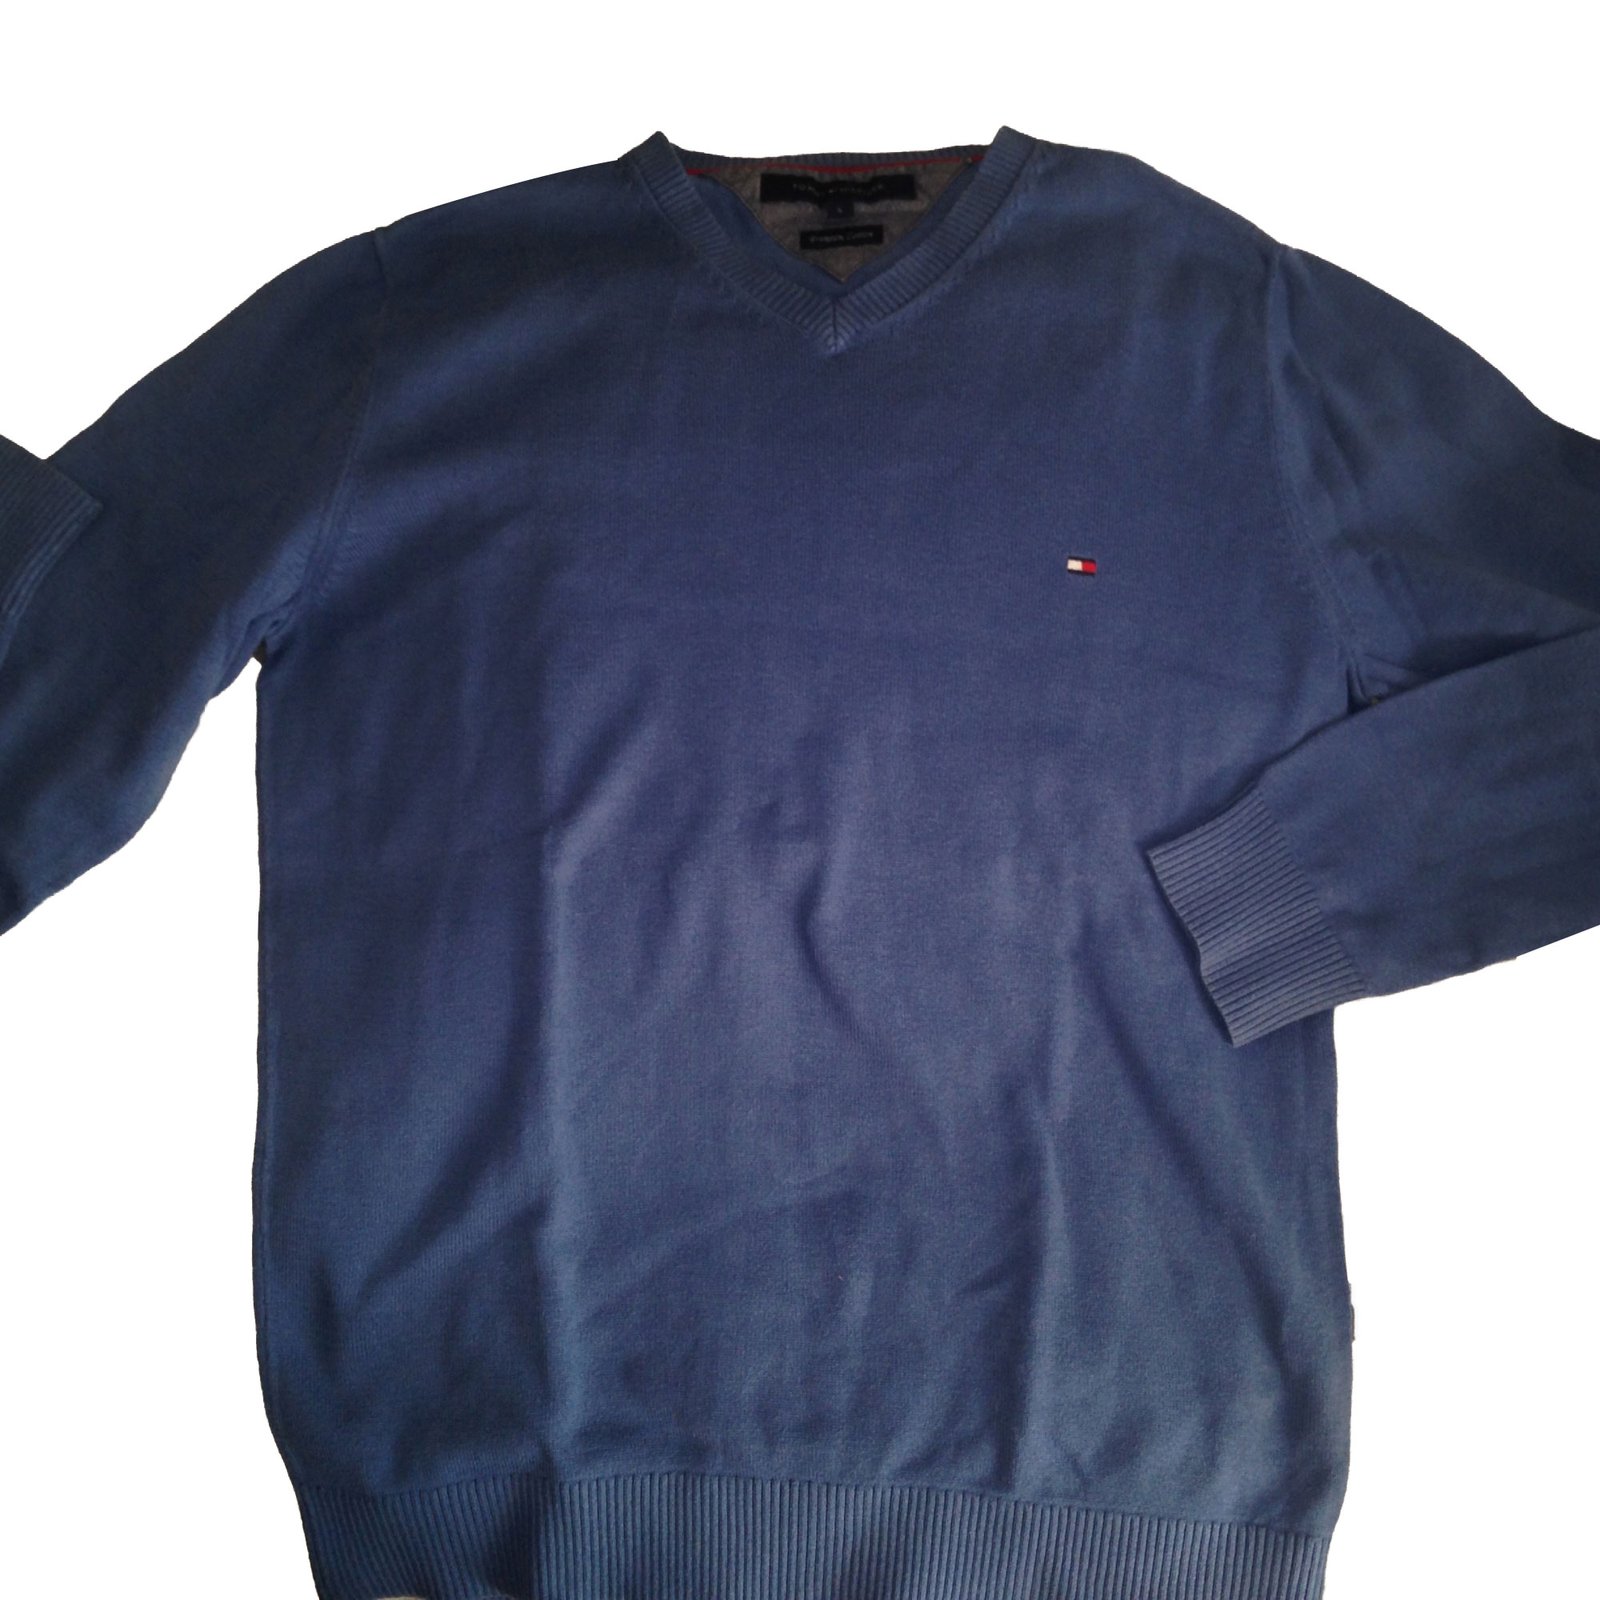 hilfiger blue sweater